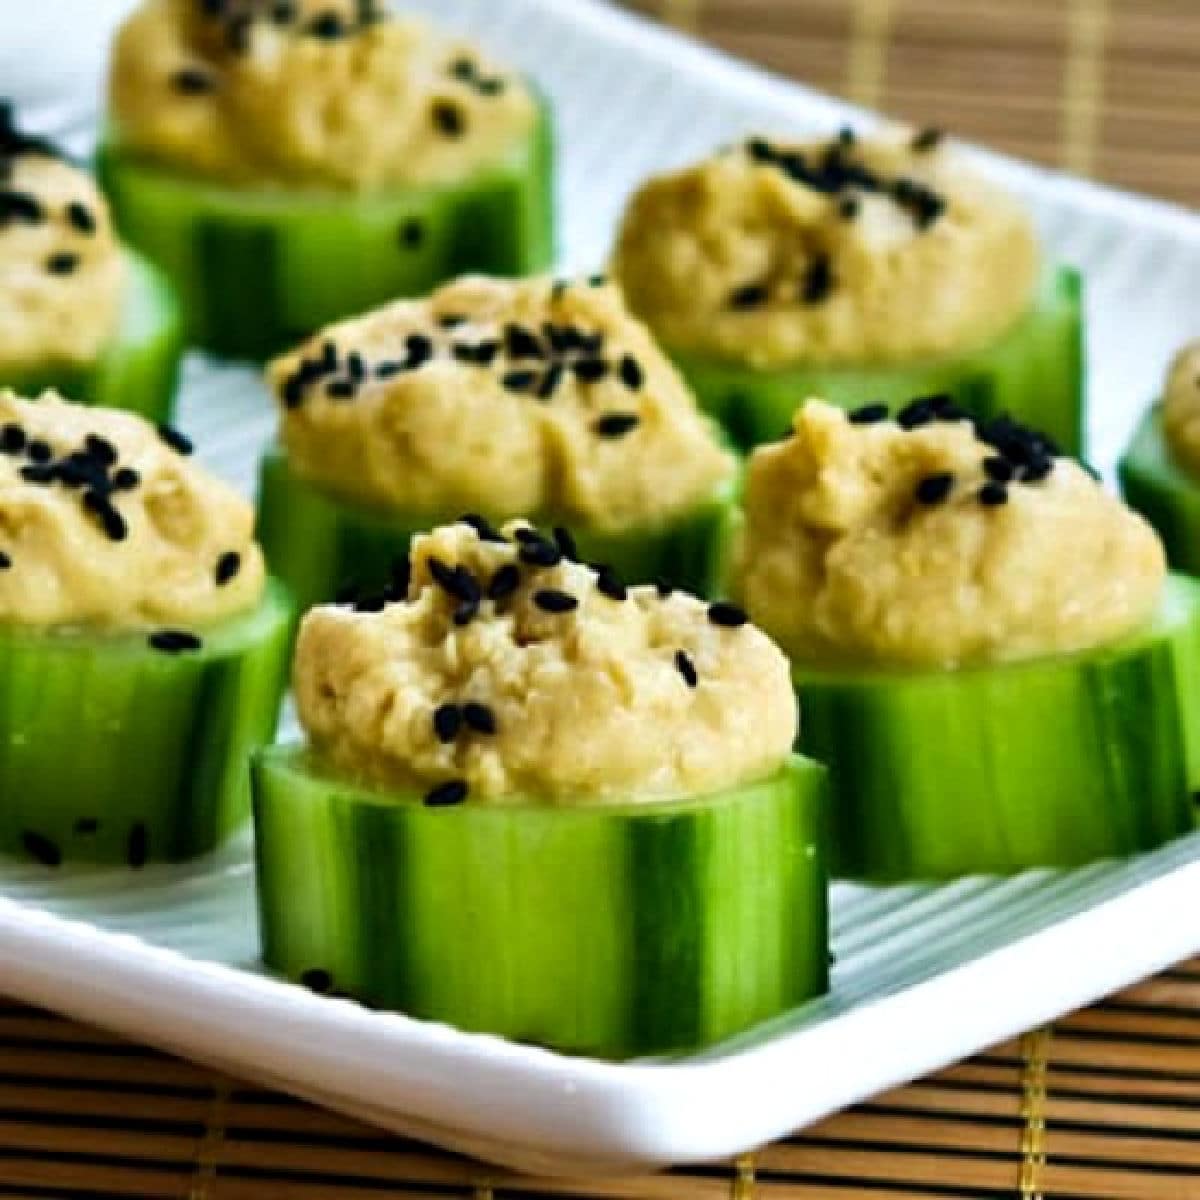 Cucumber Hummus Bites shown on serving dish.